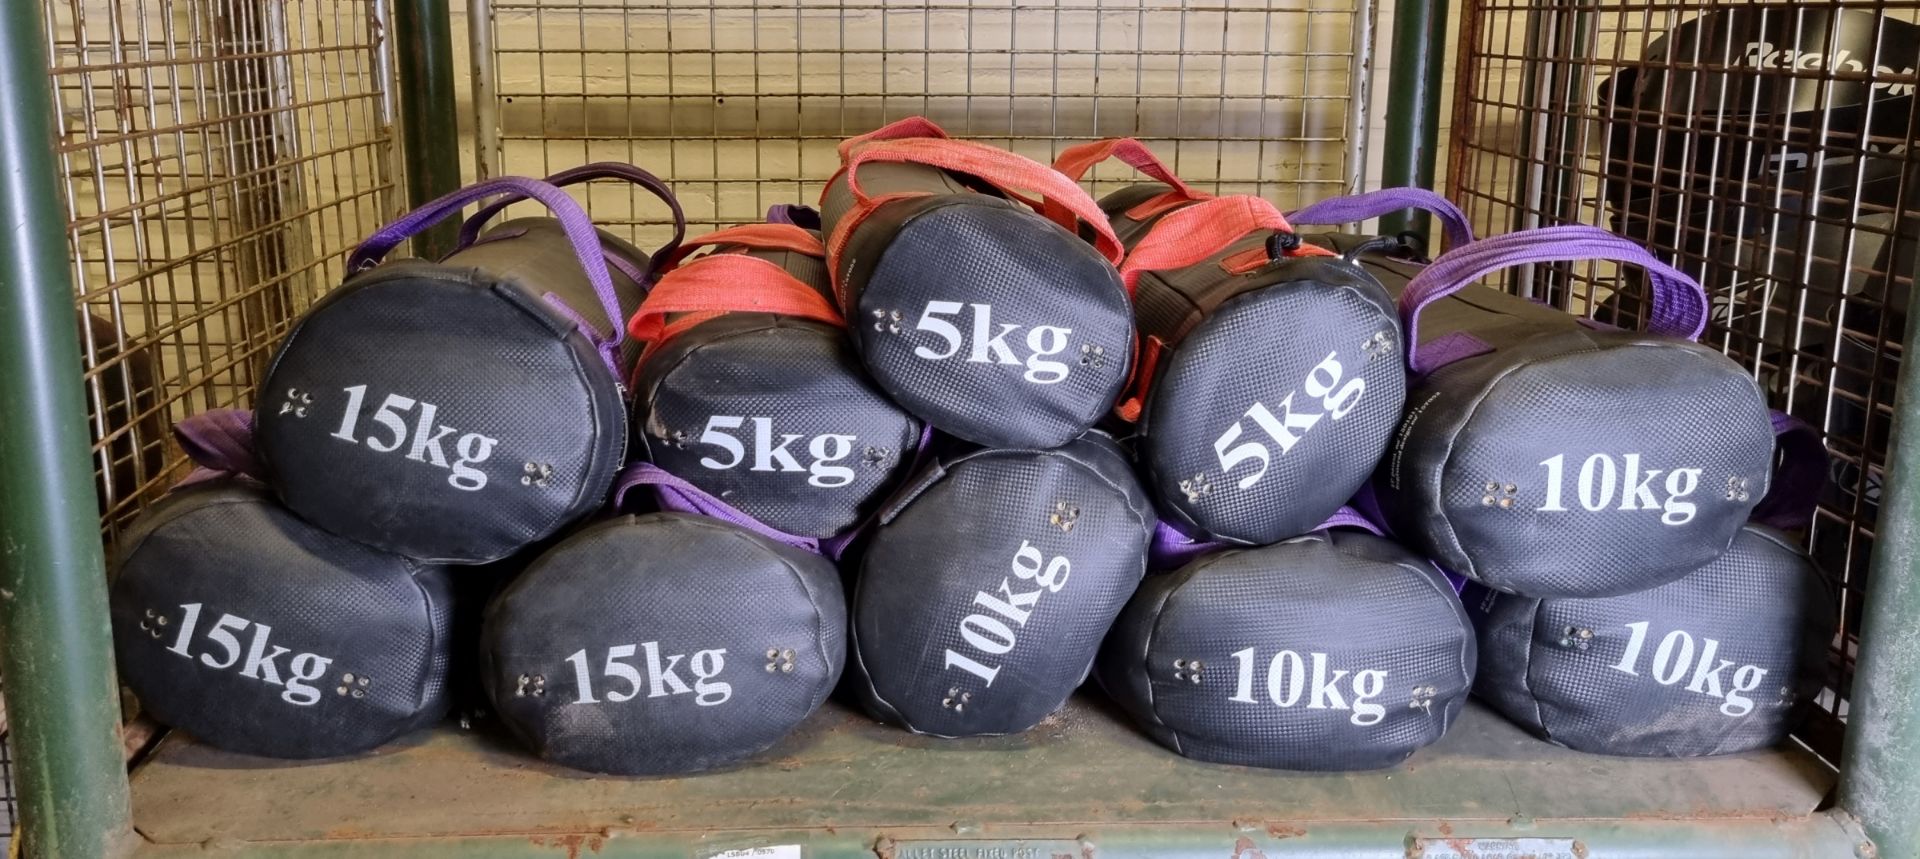 13x exercise powerbags - 3x 5kg, 7x 10kg, 3x 15kg